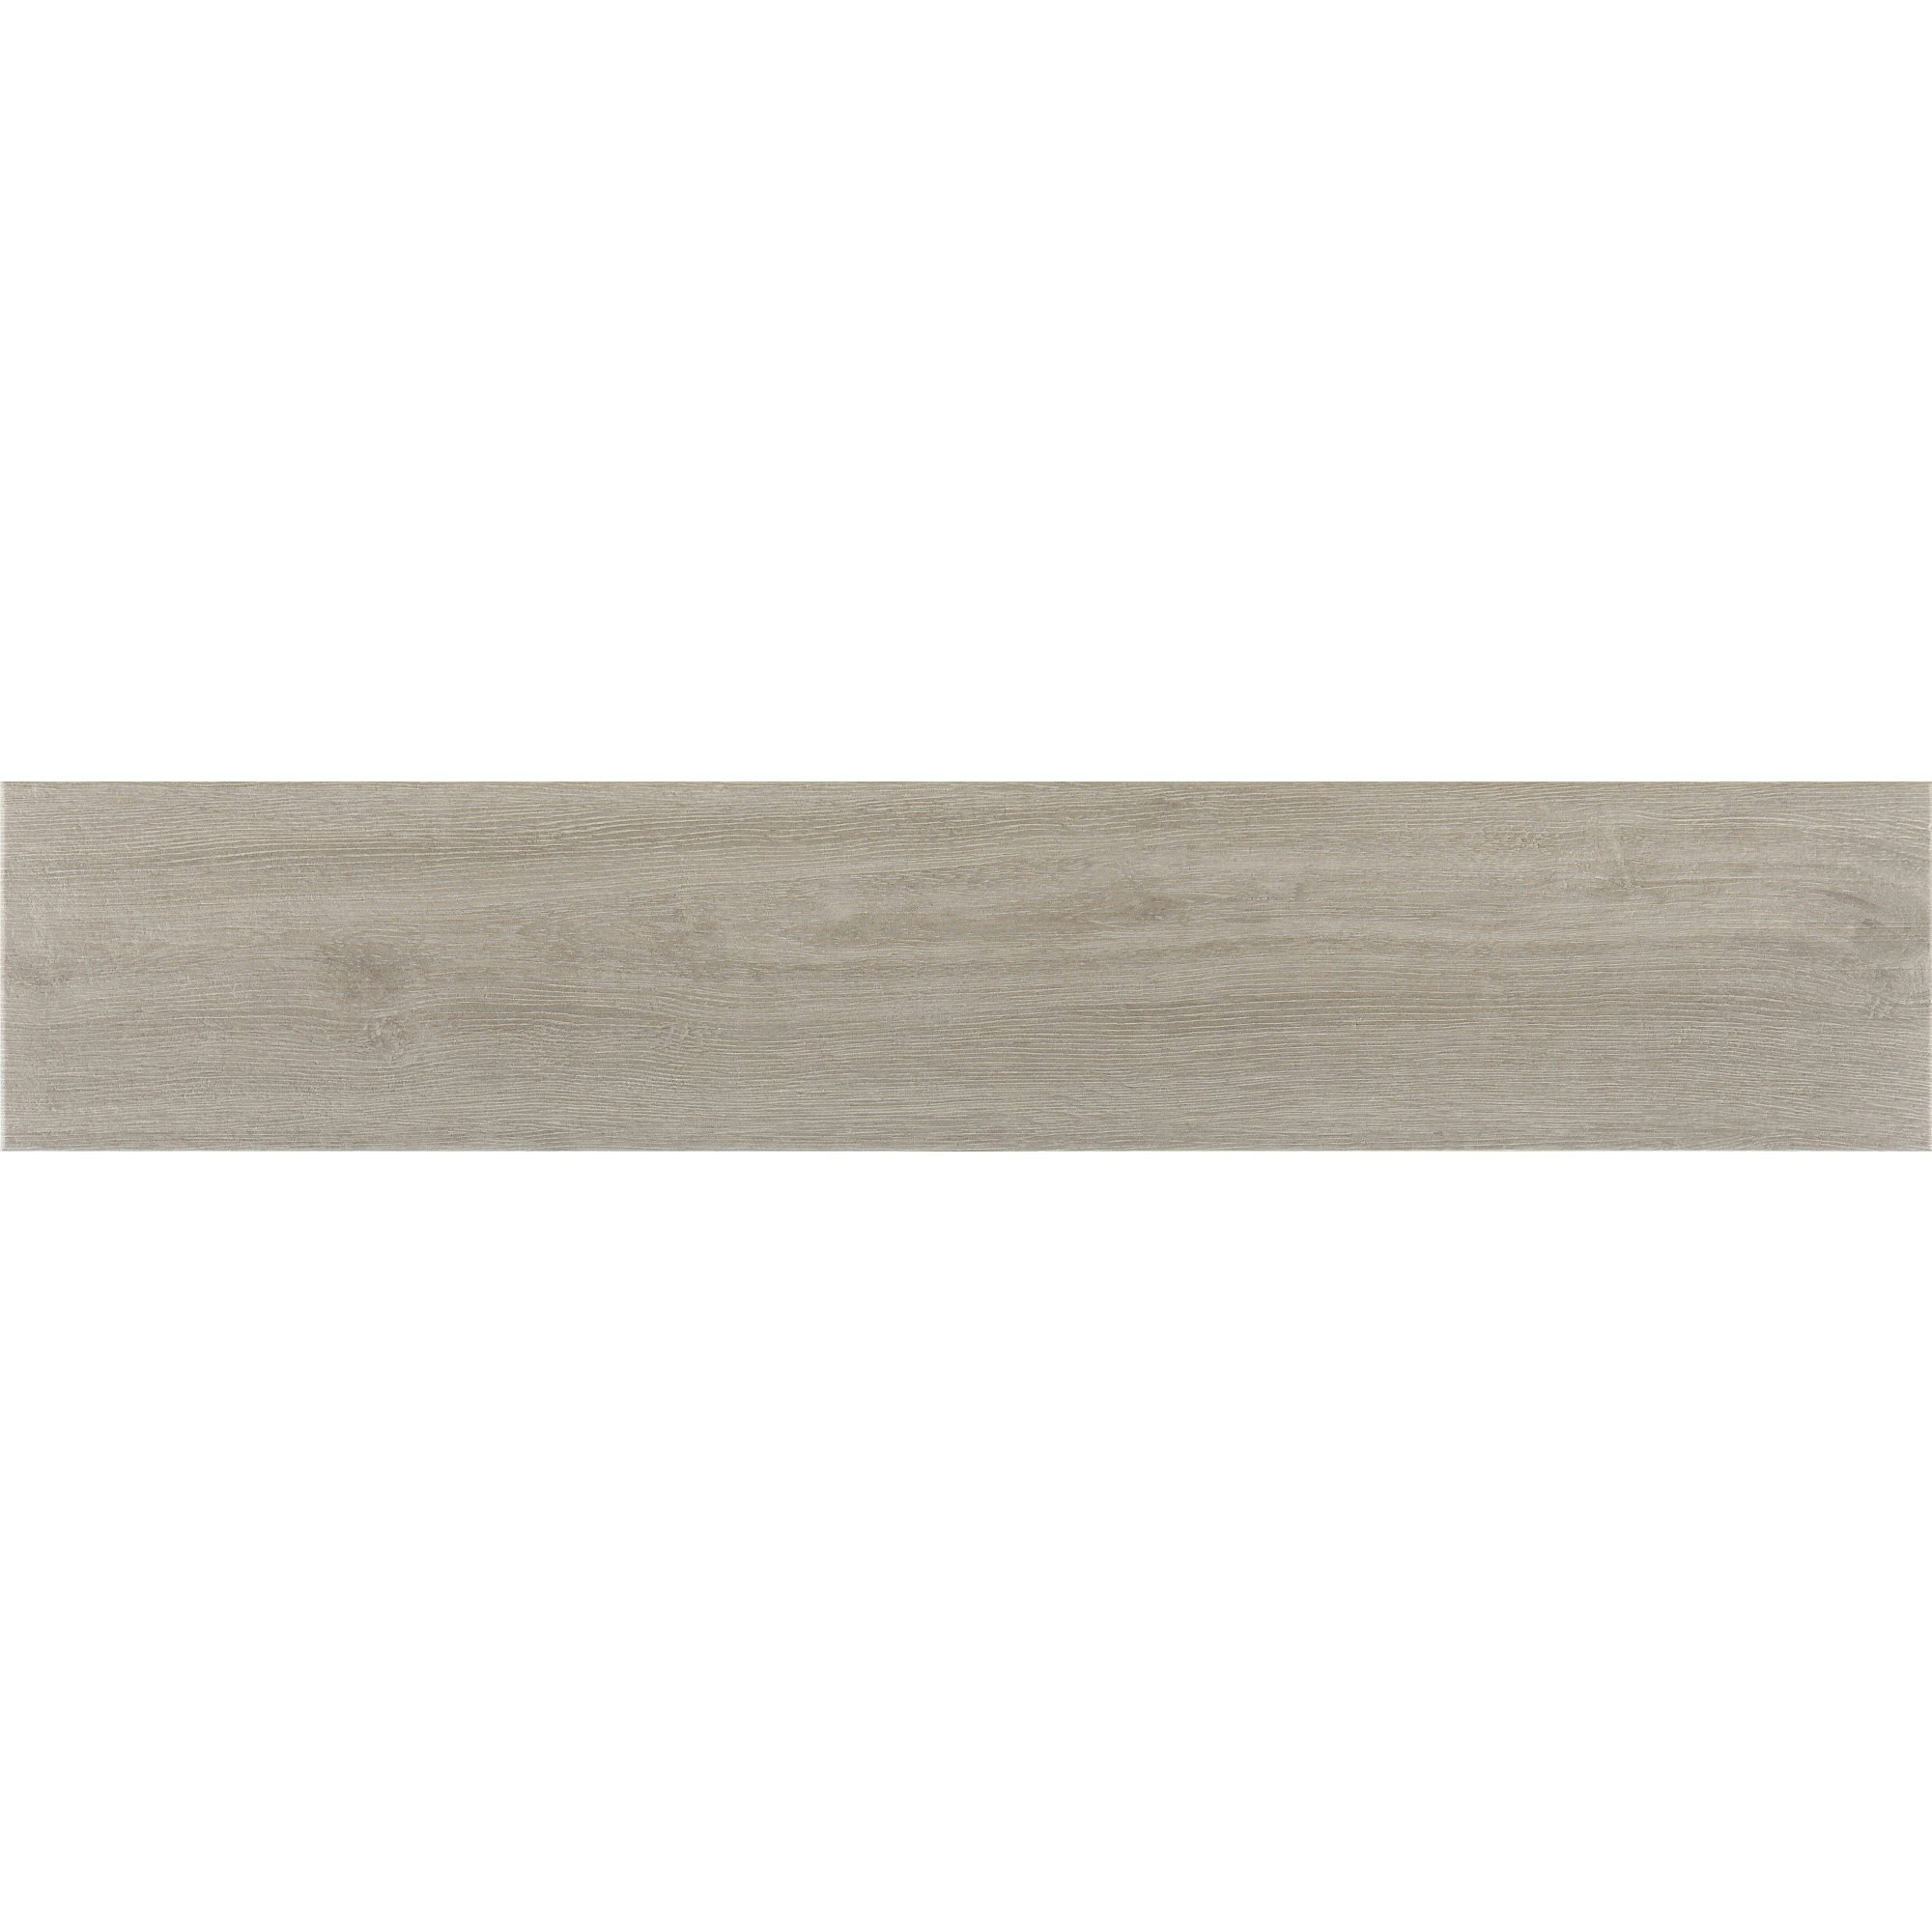 Chudleigh Grey Wood Effect Tile